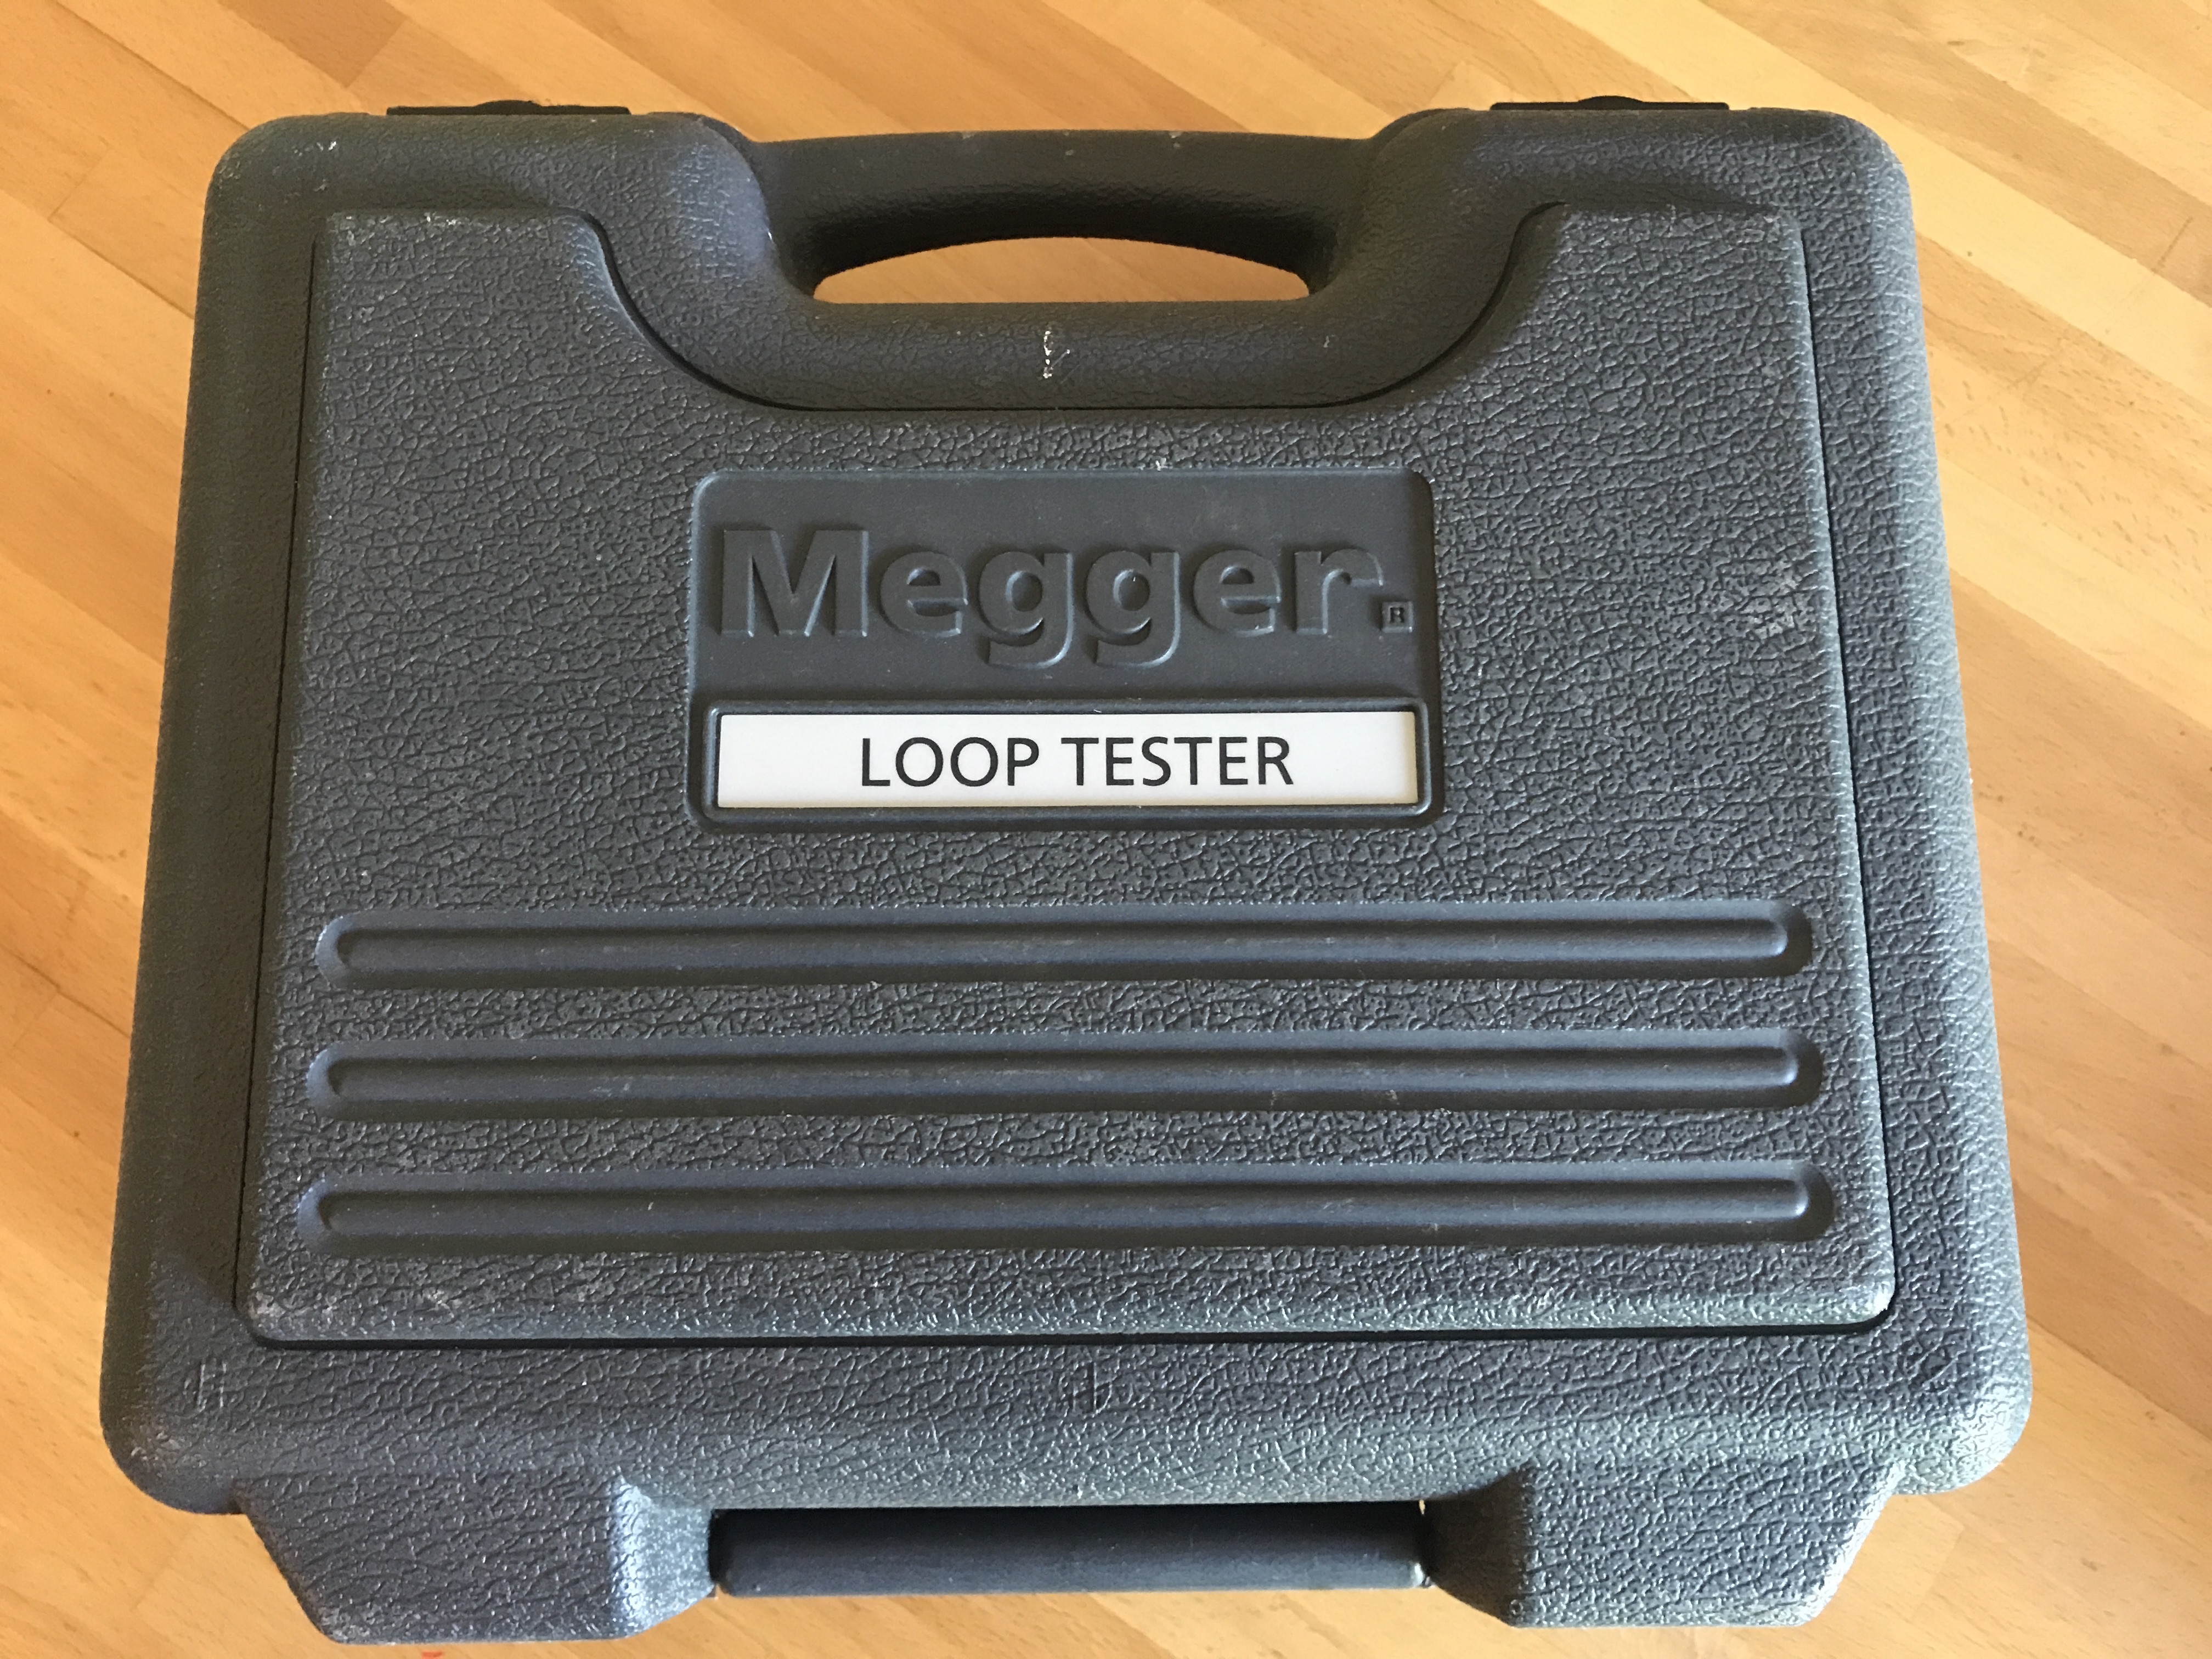 For Sale - Megger LTW 325 Loop Tester (2 wire) fullsizeoutput_dc0 - EletriciansForums.net